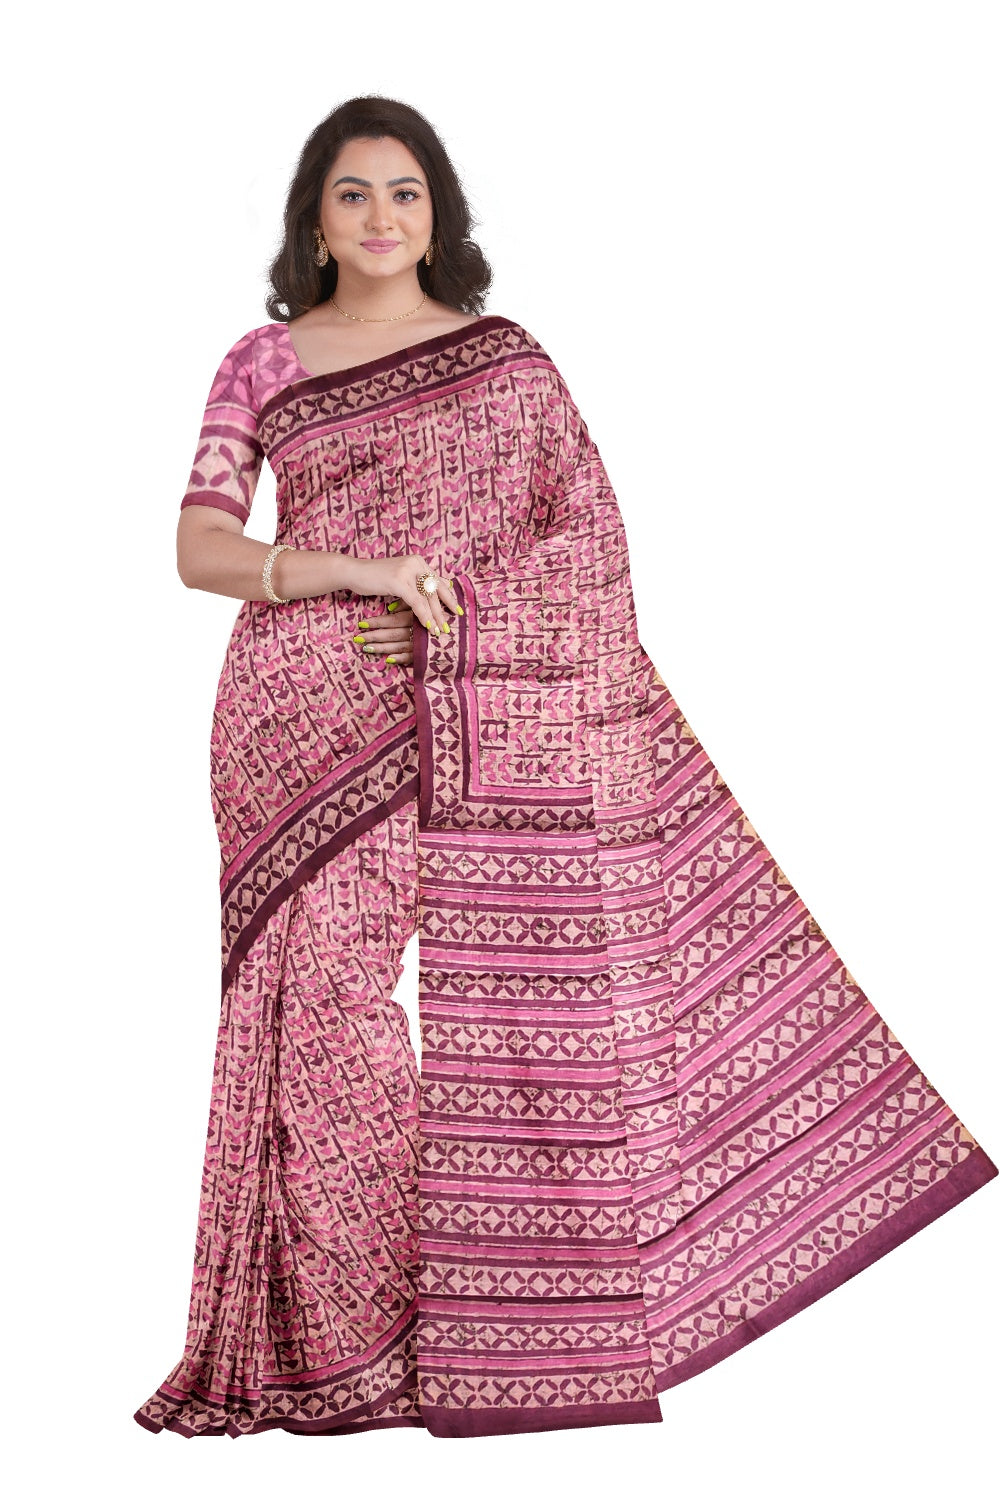 Southloom Pink Cotton Chanderi Printed Designer Saree